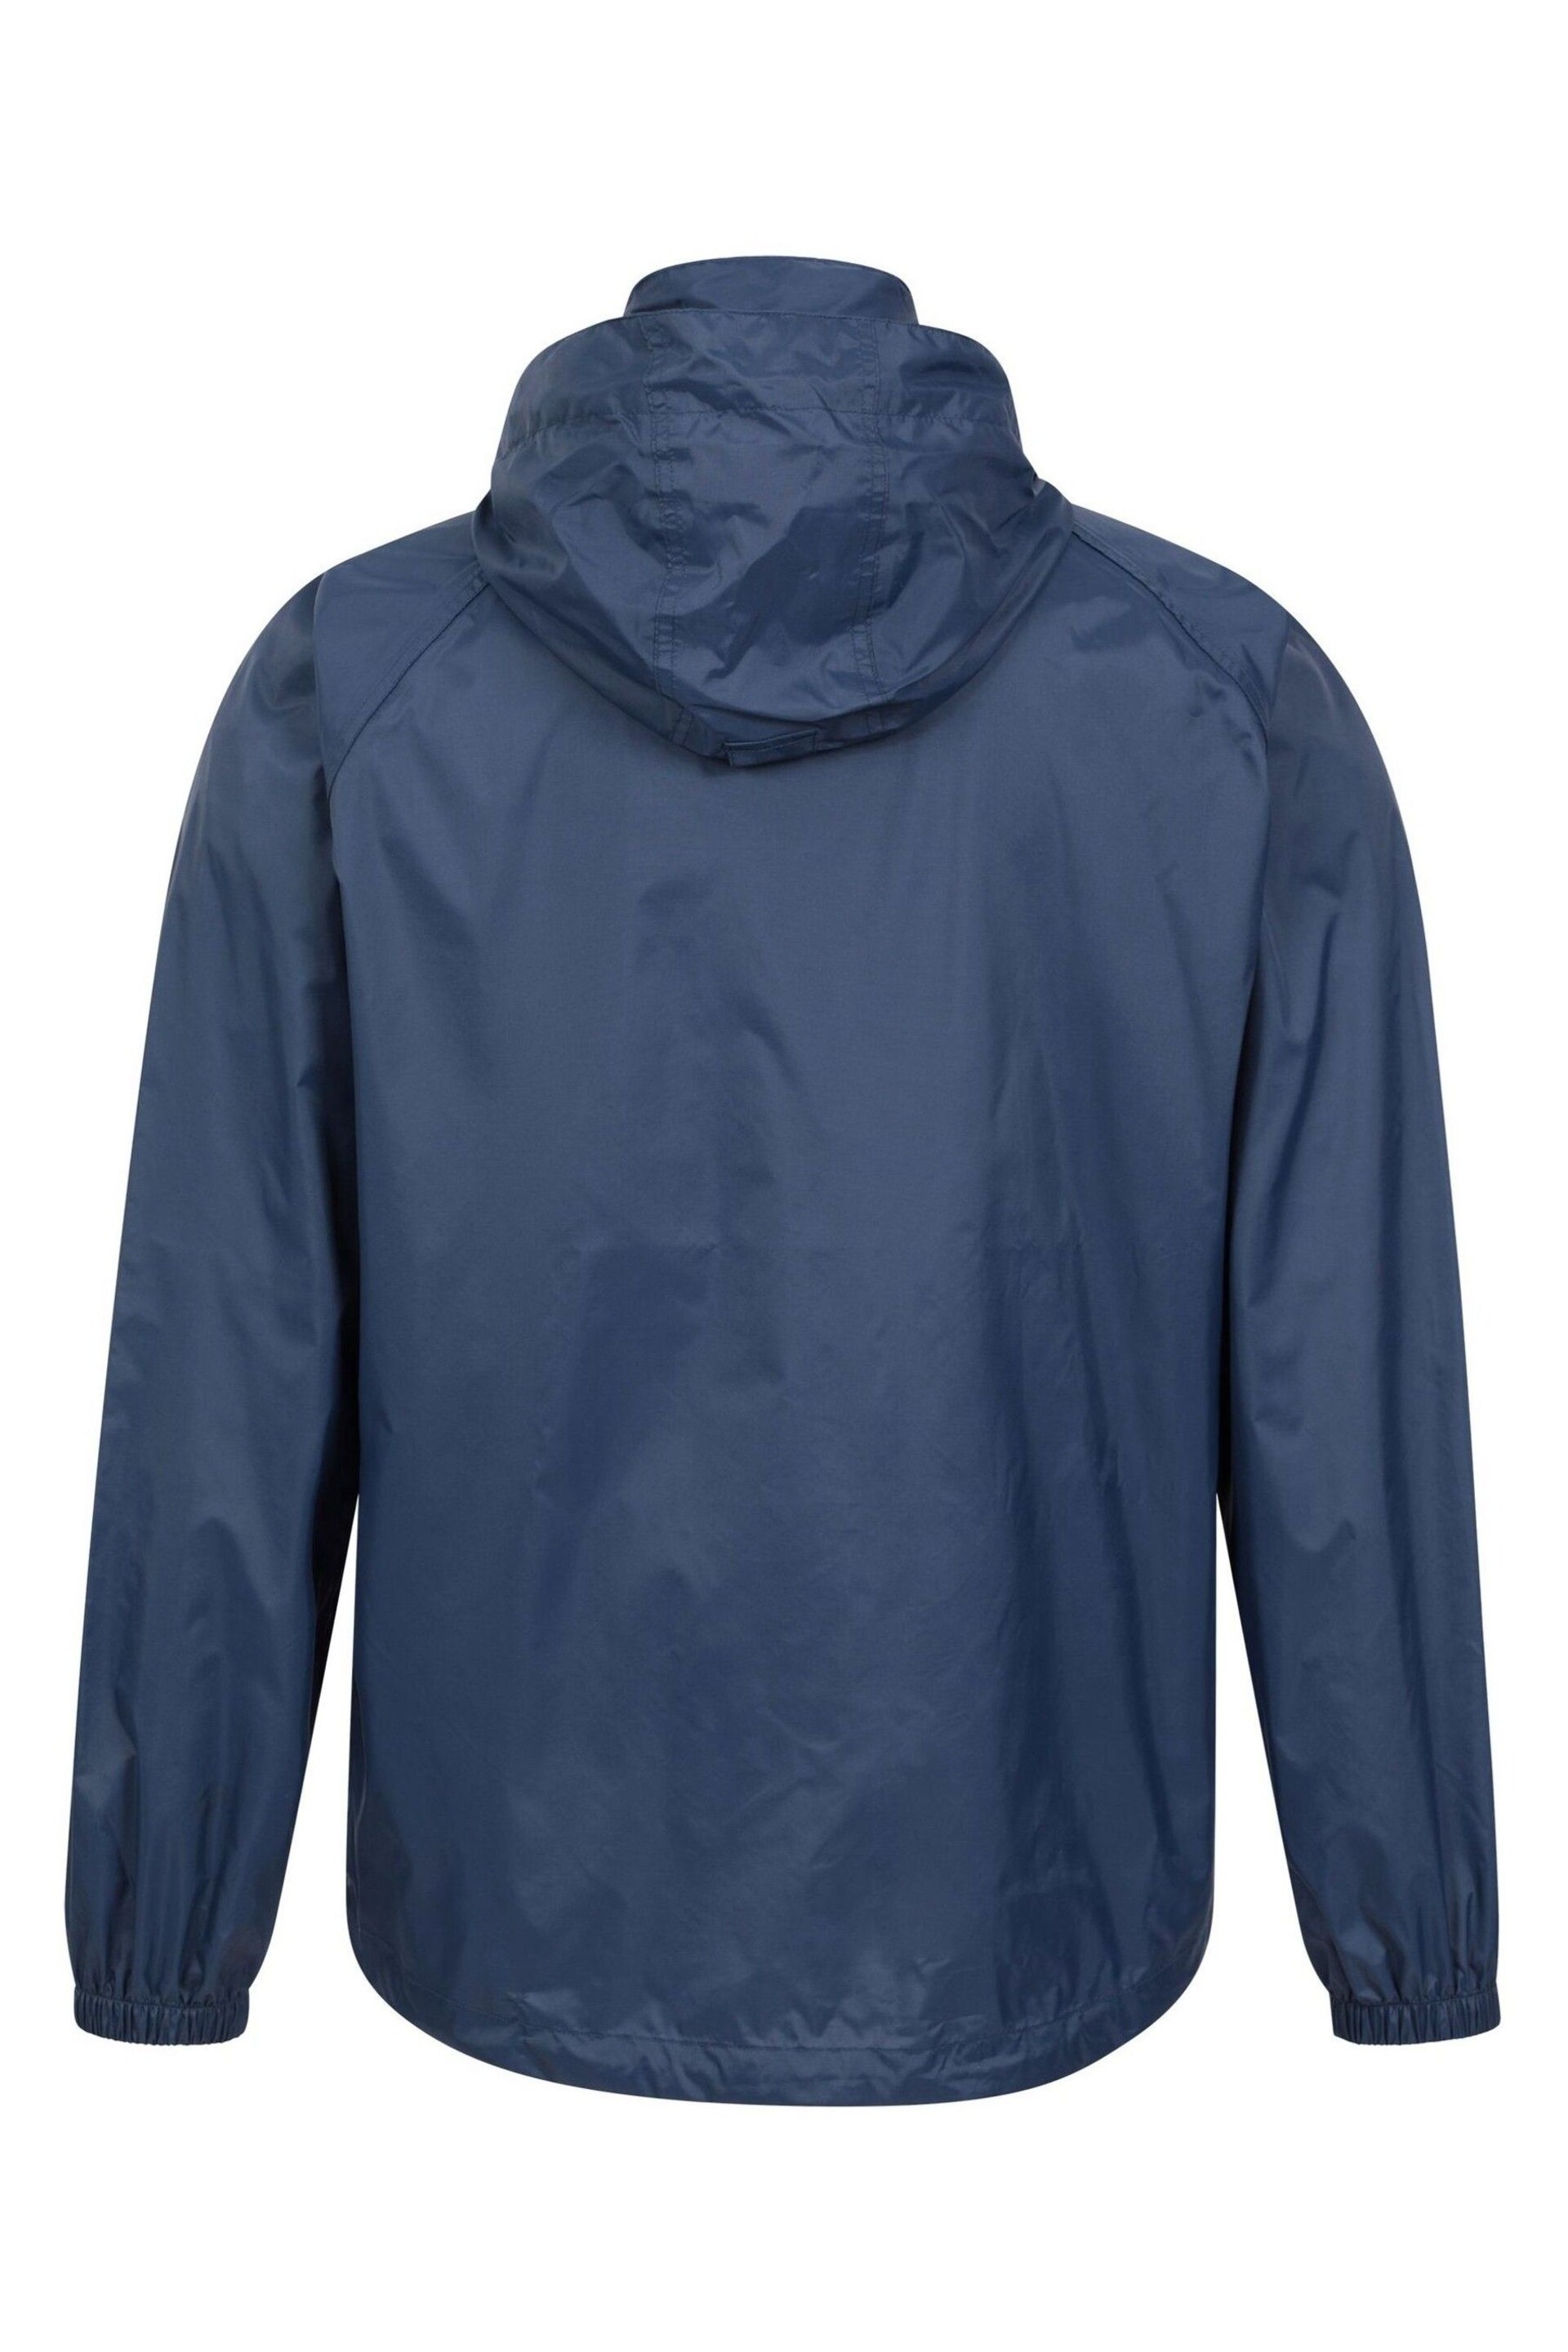 Mountain Warehouse Blue Mens Pakka Waterproof Jacket - Image 3 of 5